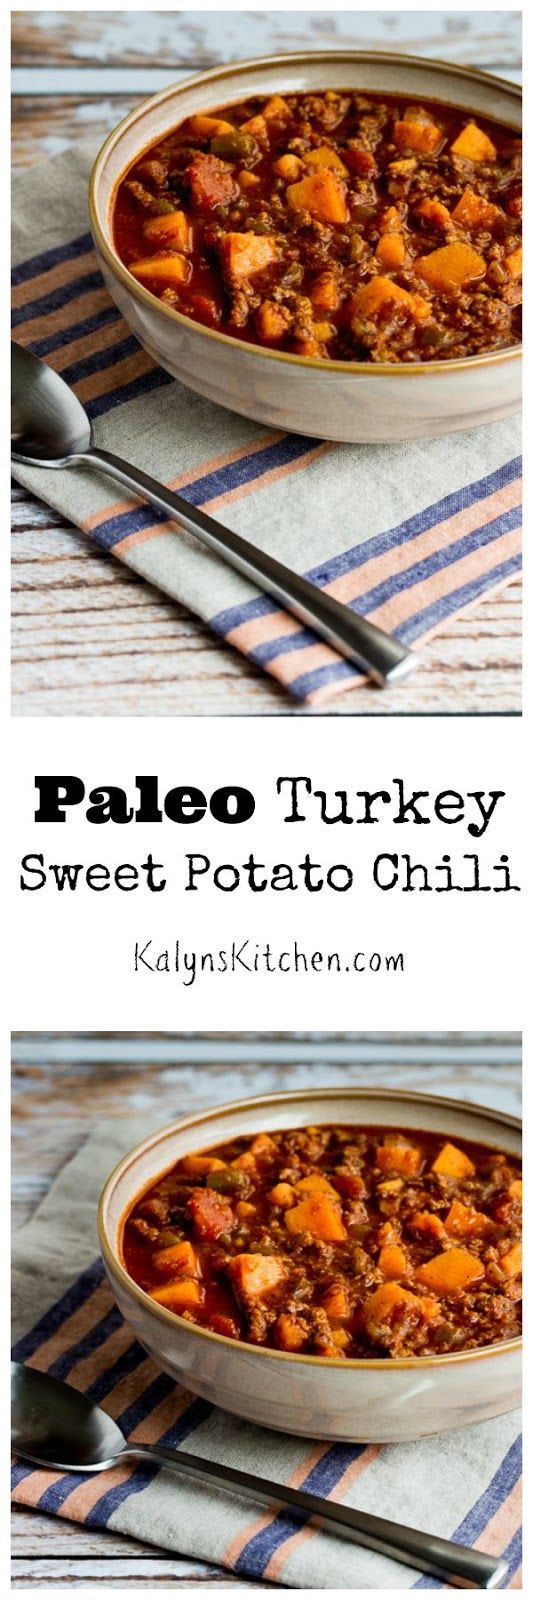 Paleo Turkey Sweet Potato Chili is also gluten-free and dairy-free. If you like savory sweet potato re